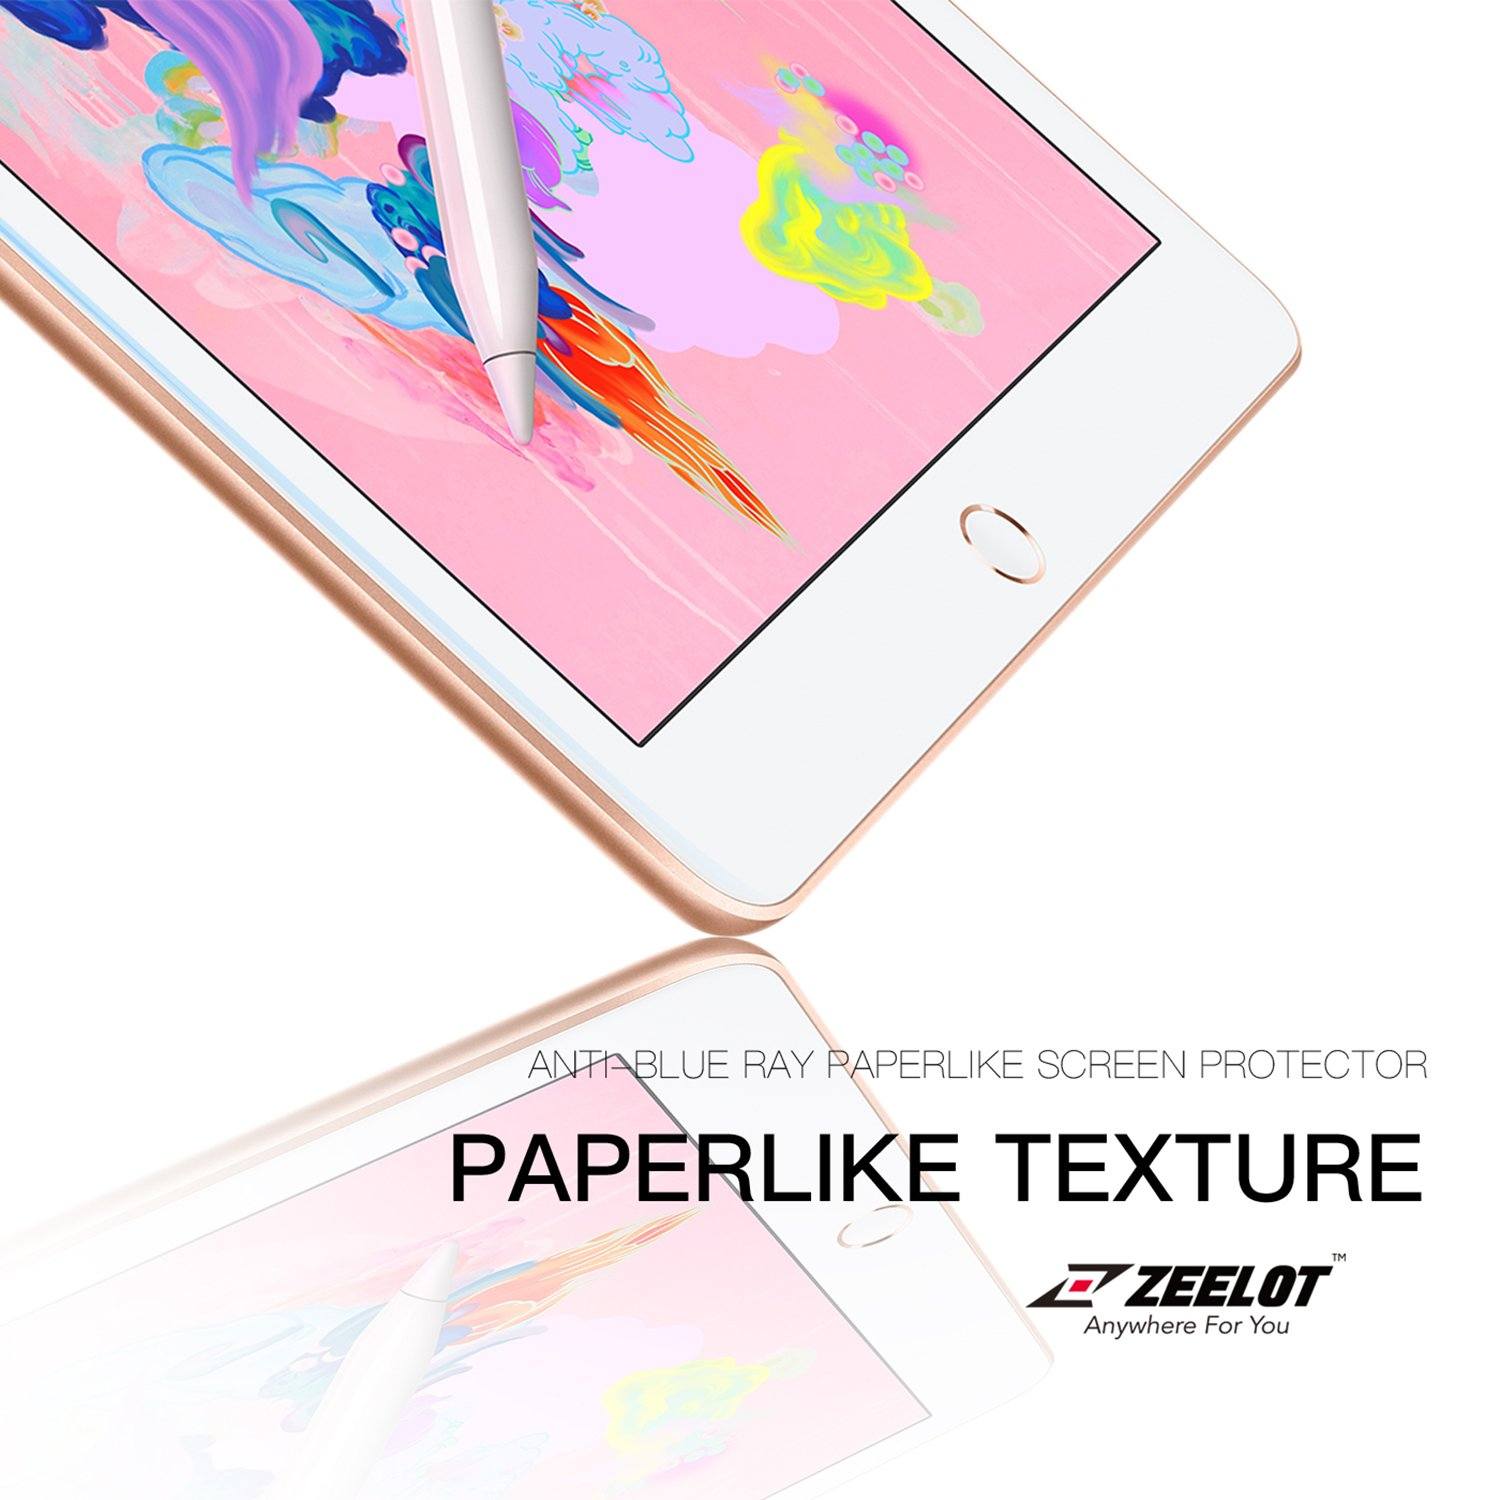 ZEELOT Anti Blue Ray Paper Like Screen Protector for iPad Mini 5 7.9"(2019/2015) Default Zeelot 